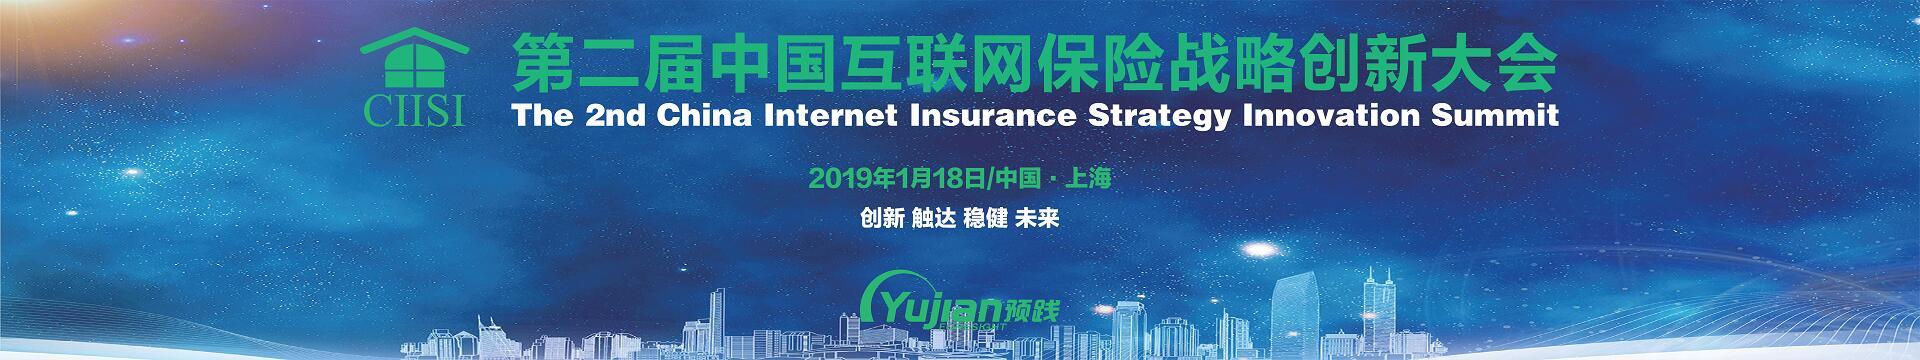 CIISI 第二届中国互联网保险战略创新大会